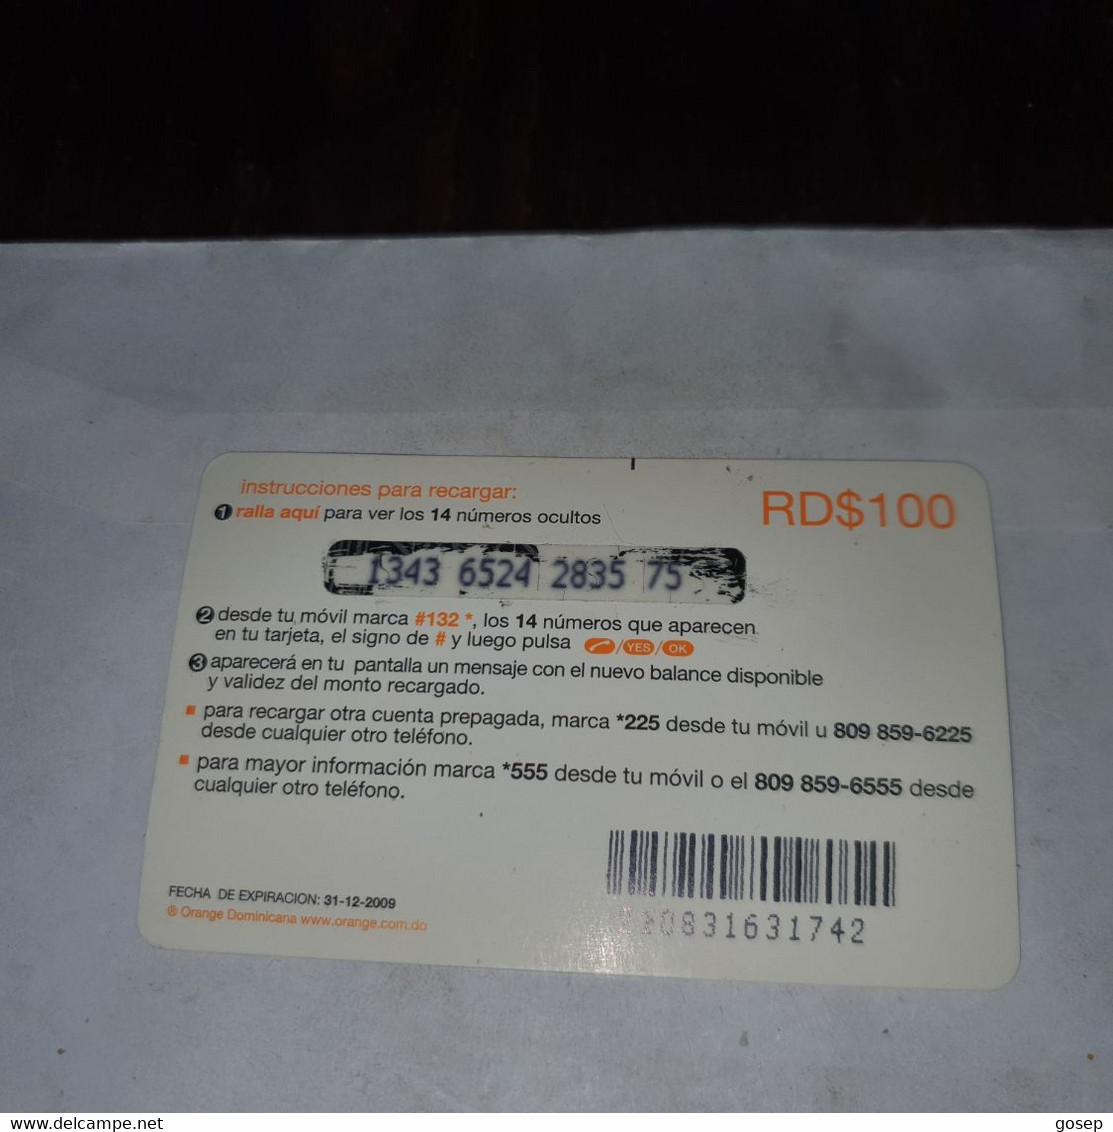 Dominicana-(orange-24rd$100)-(5)-(1343-6524-2835-75)-(31.12.2009)-used Card+1card Prepiad Free - Dominicana